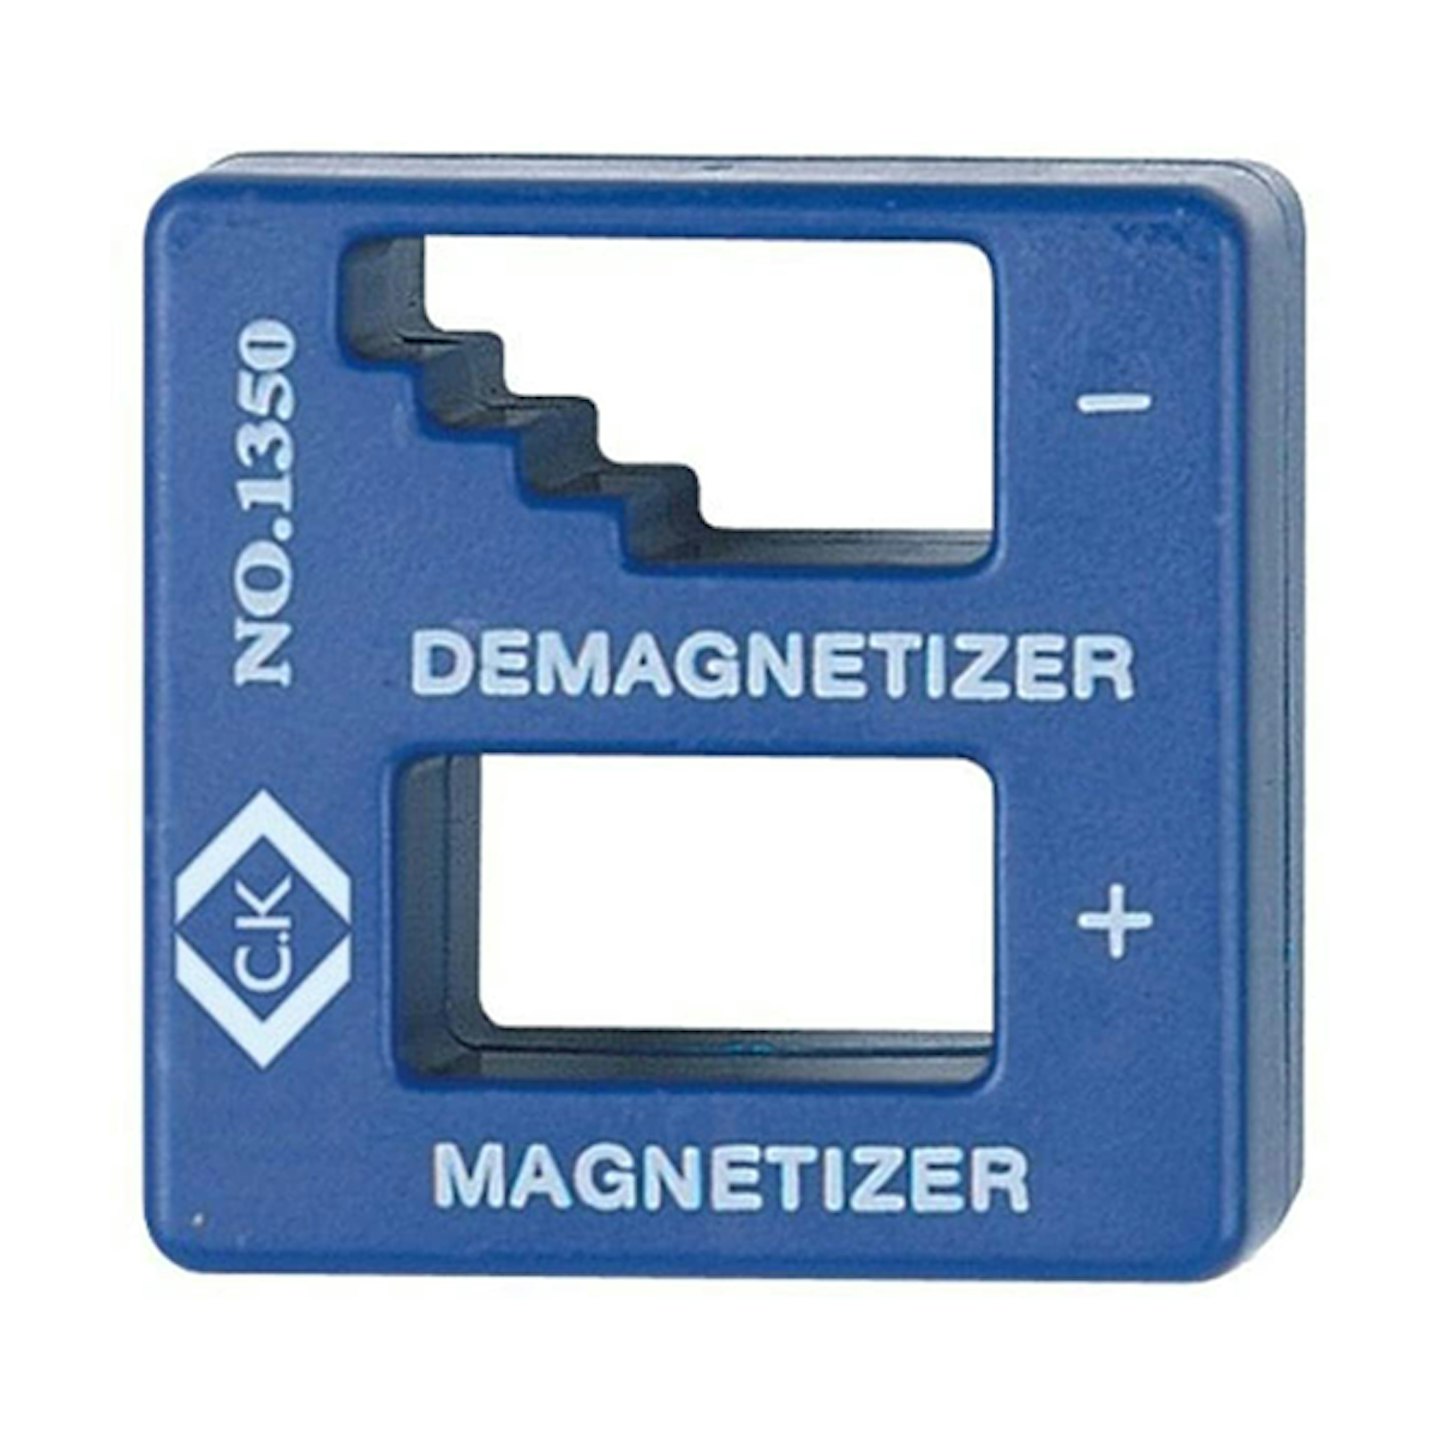 C.K T1350 Magnetiser and Demagnetiser